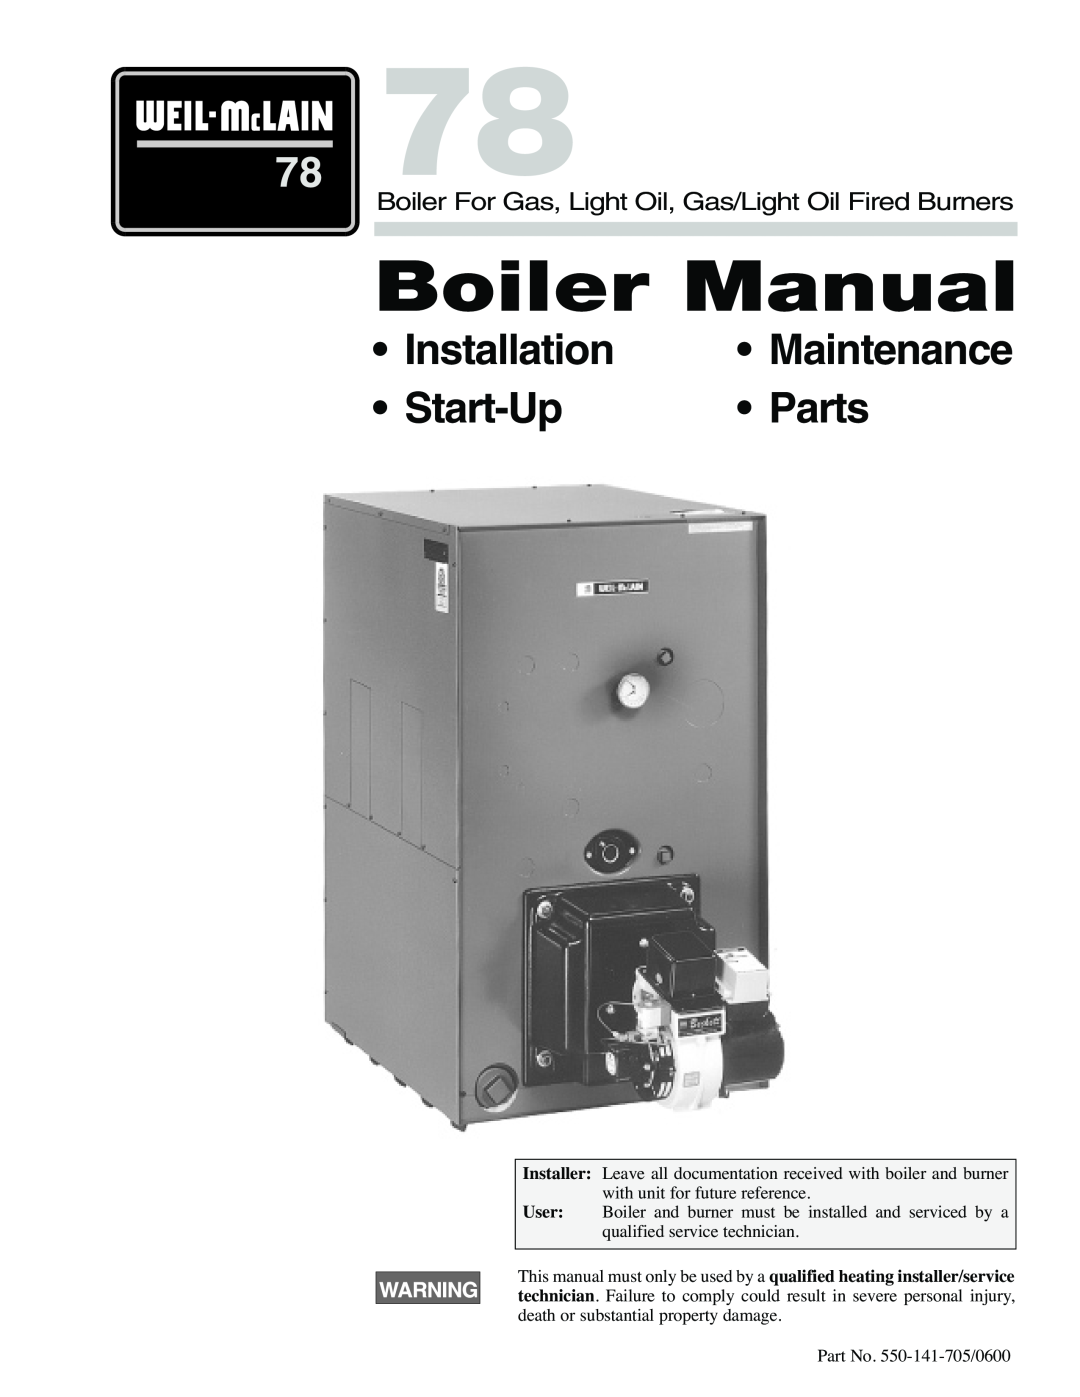 Weil-McLain 78 manual Boiler Manual, Installation, Start-Up, Parts, Maintenance 